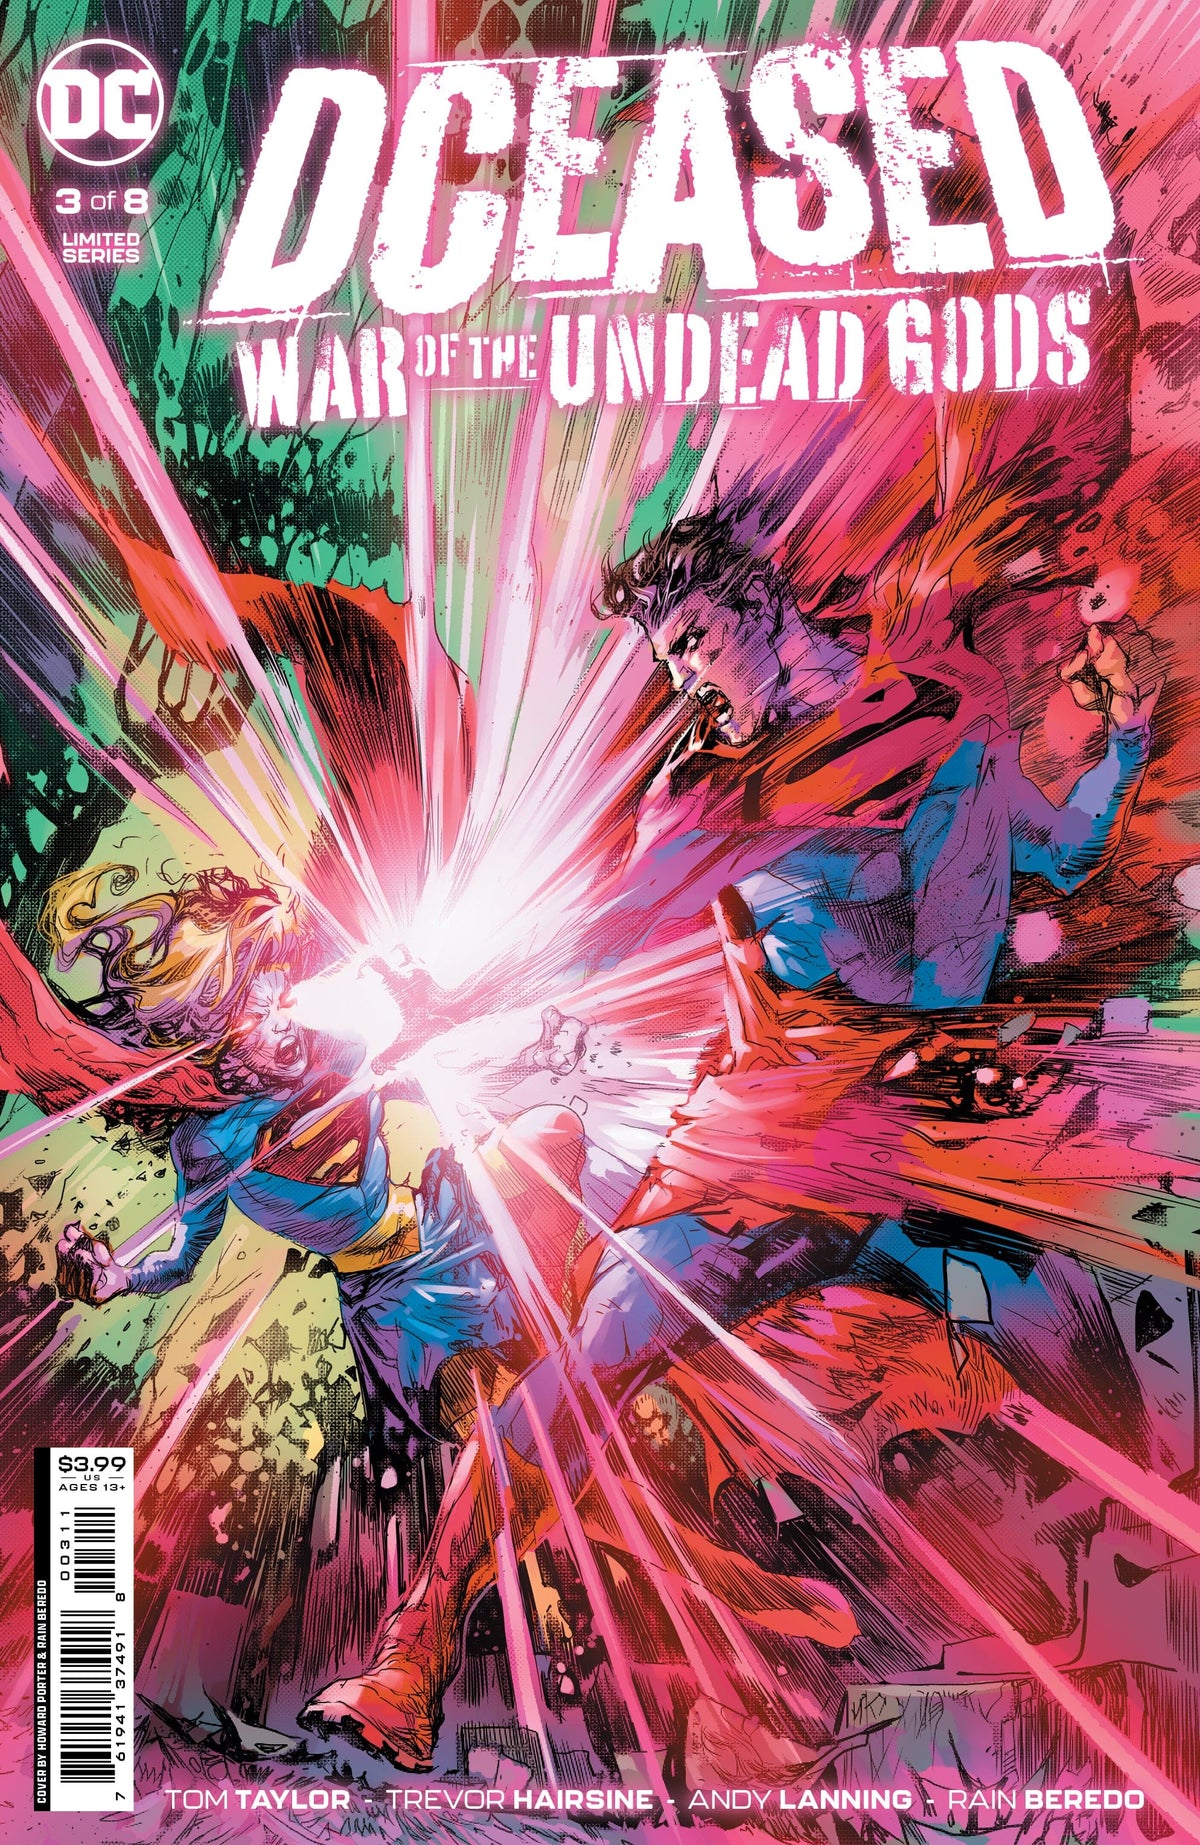 DCEASED WAR OF THE UNDEAD GODS #3 (OF 8) CVR A HOWARD PORTER - Third Eye